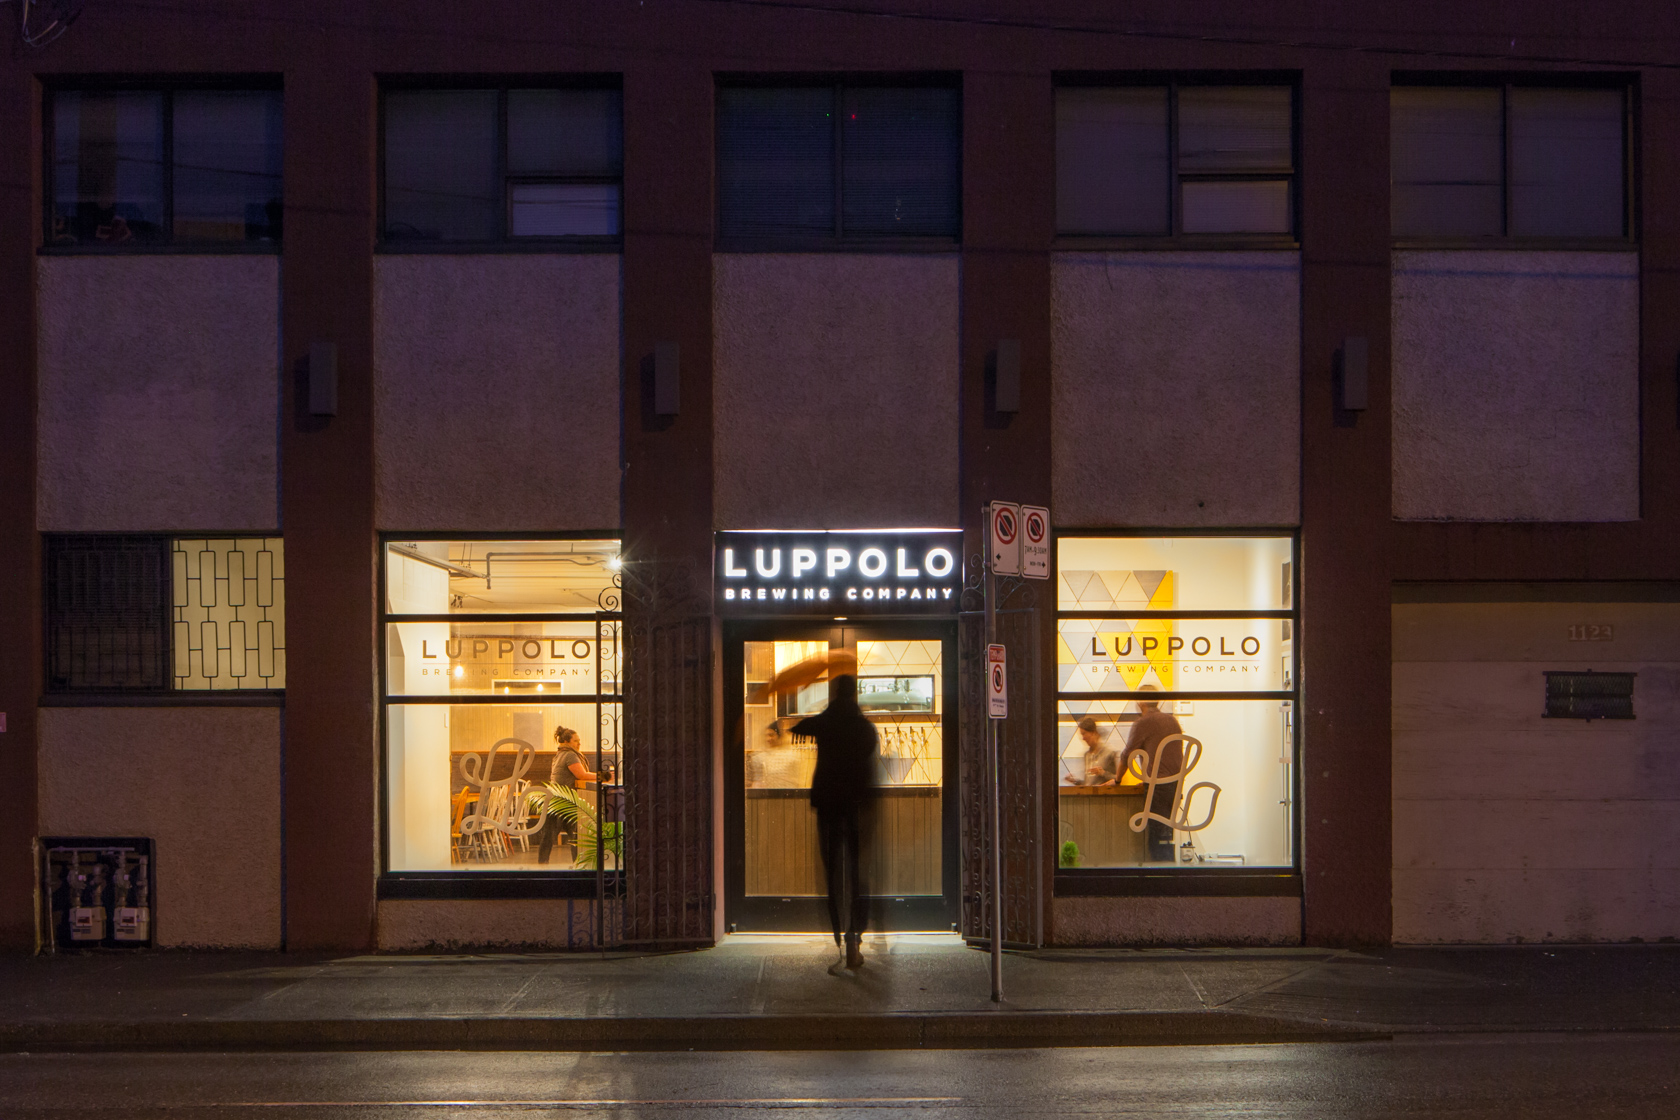 Luppolo Brewing Company